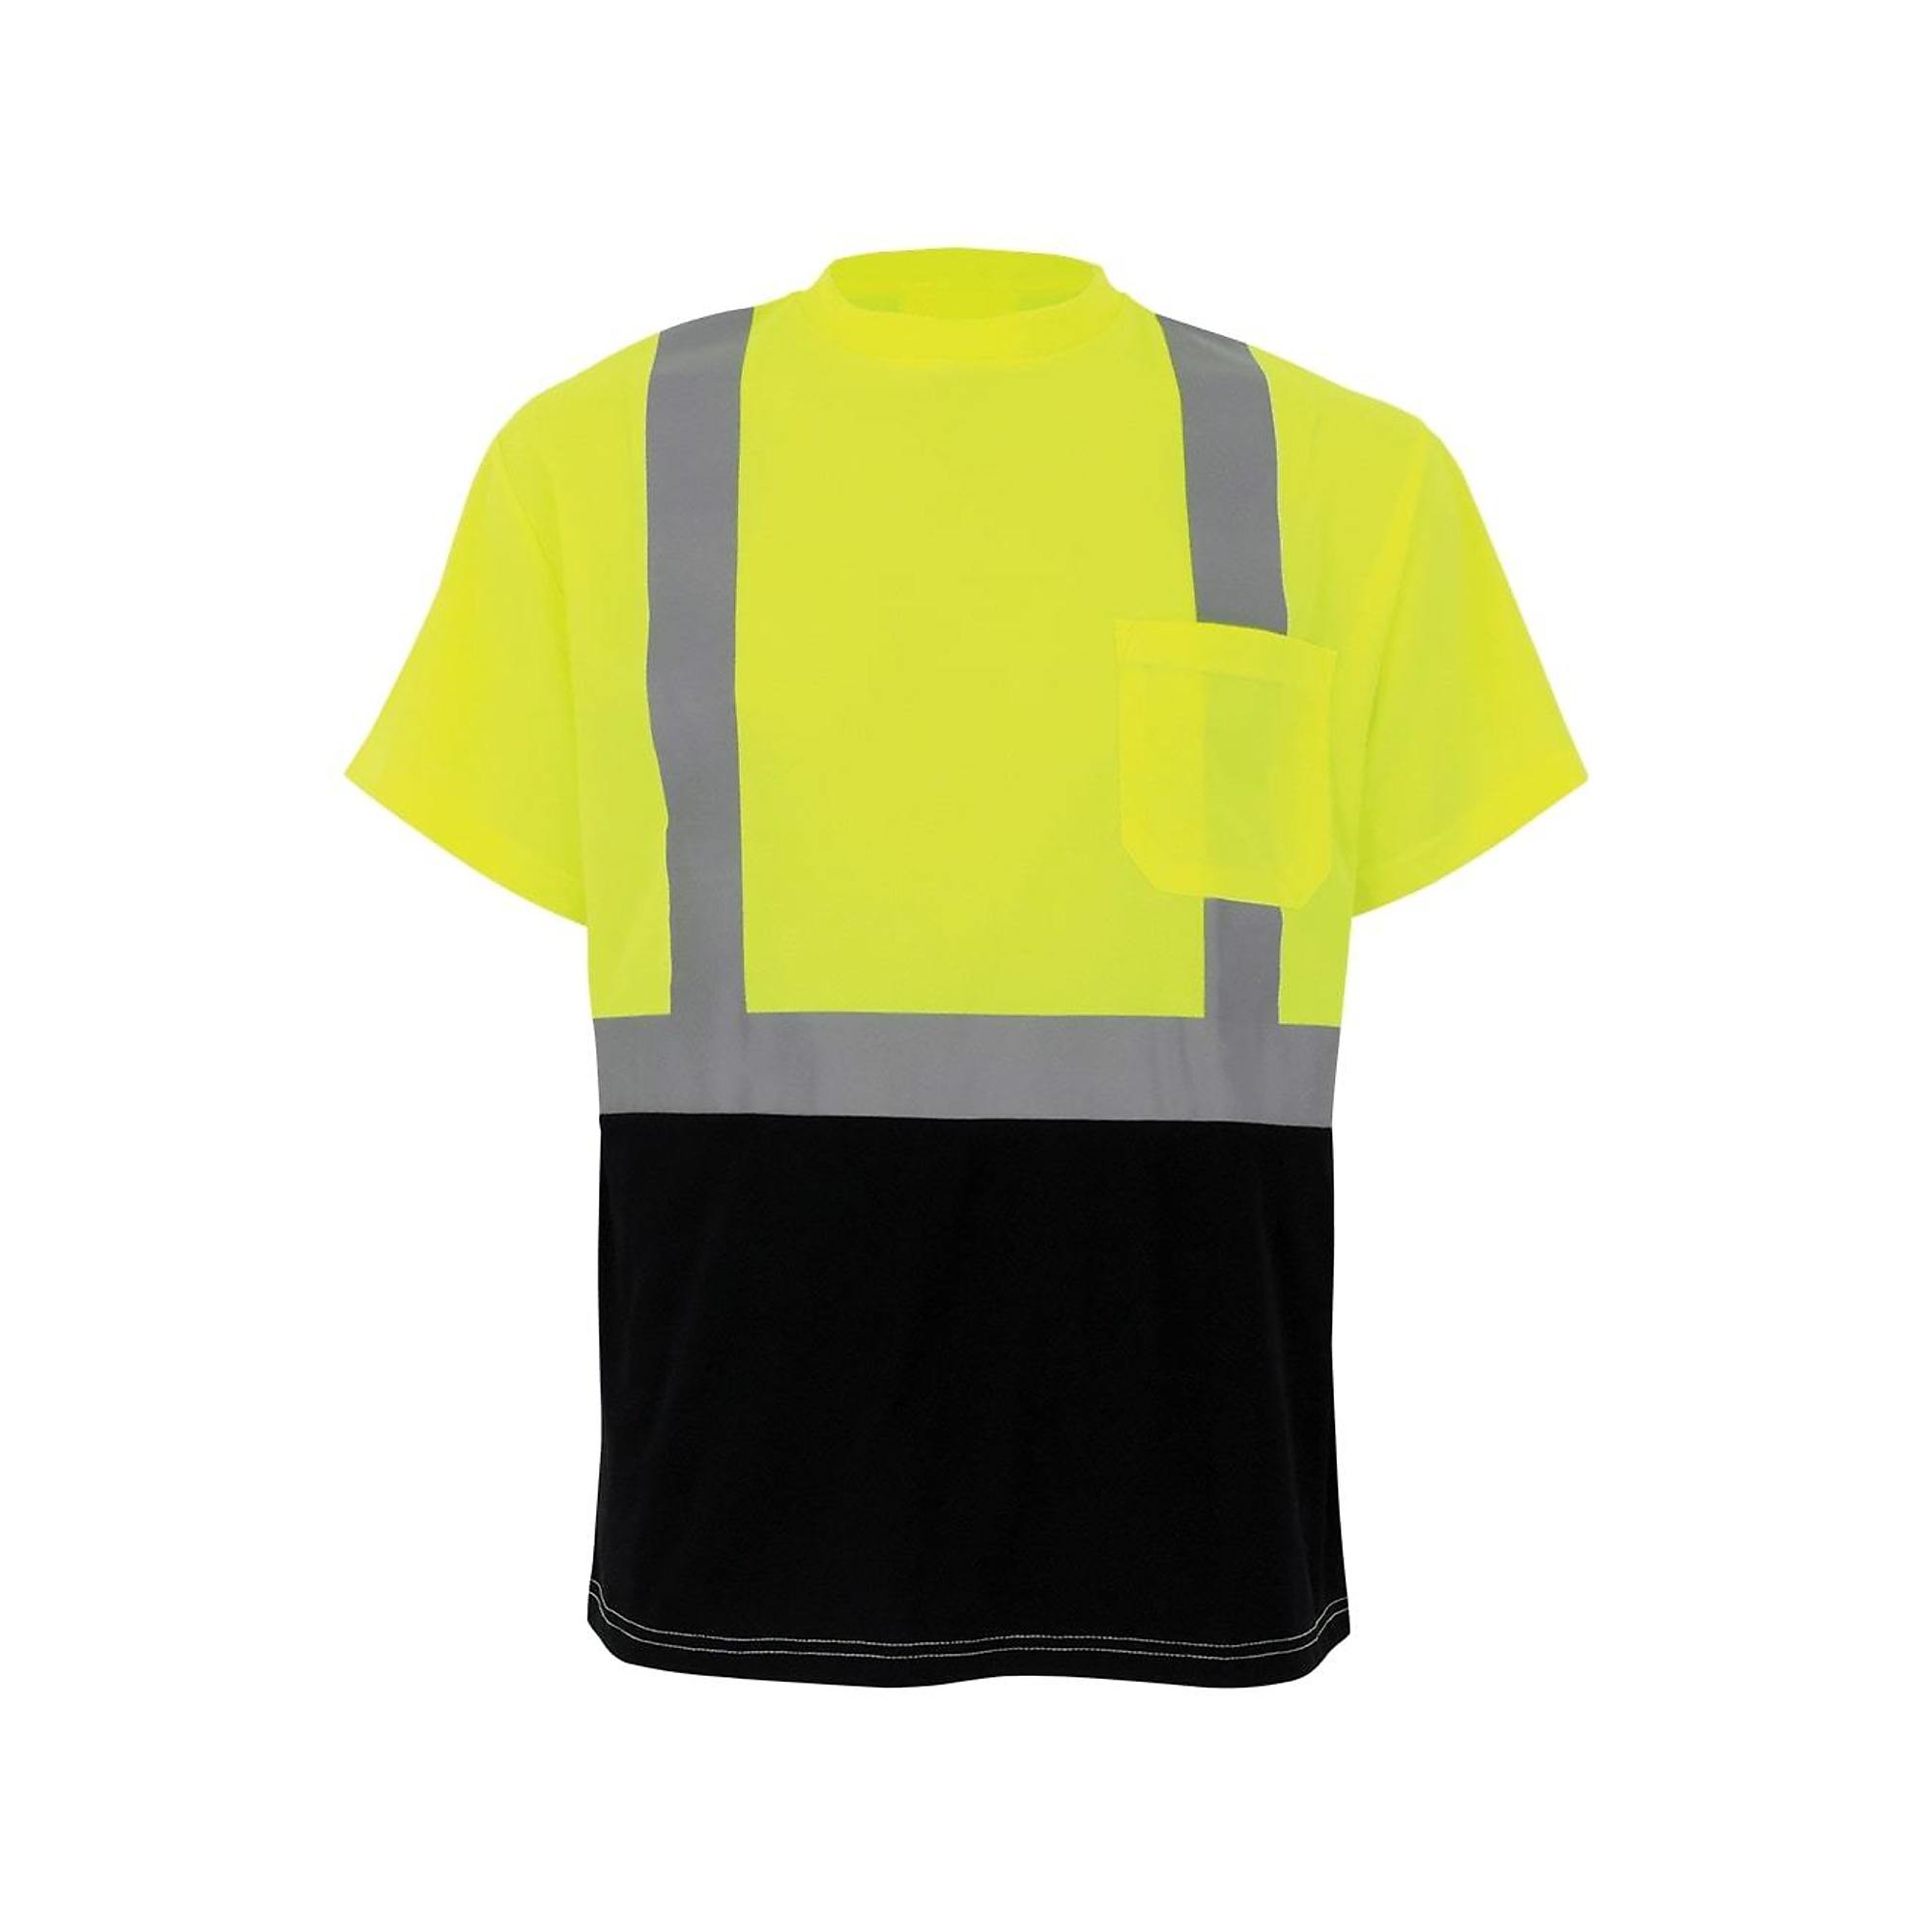 FrogWear, HV Yellow/Green, Class 2 Self-Wicking, Short-Sleeve Shirt, Size 3XL, Model GLO-007B-3XL